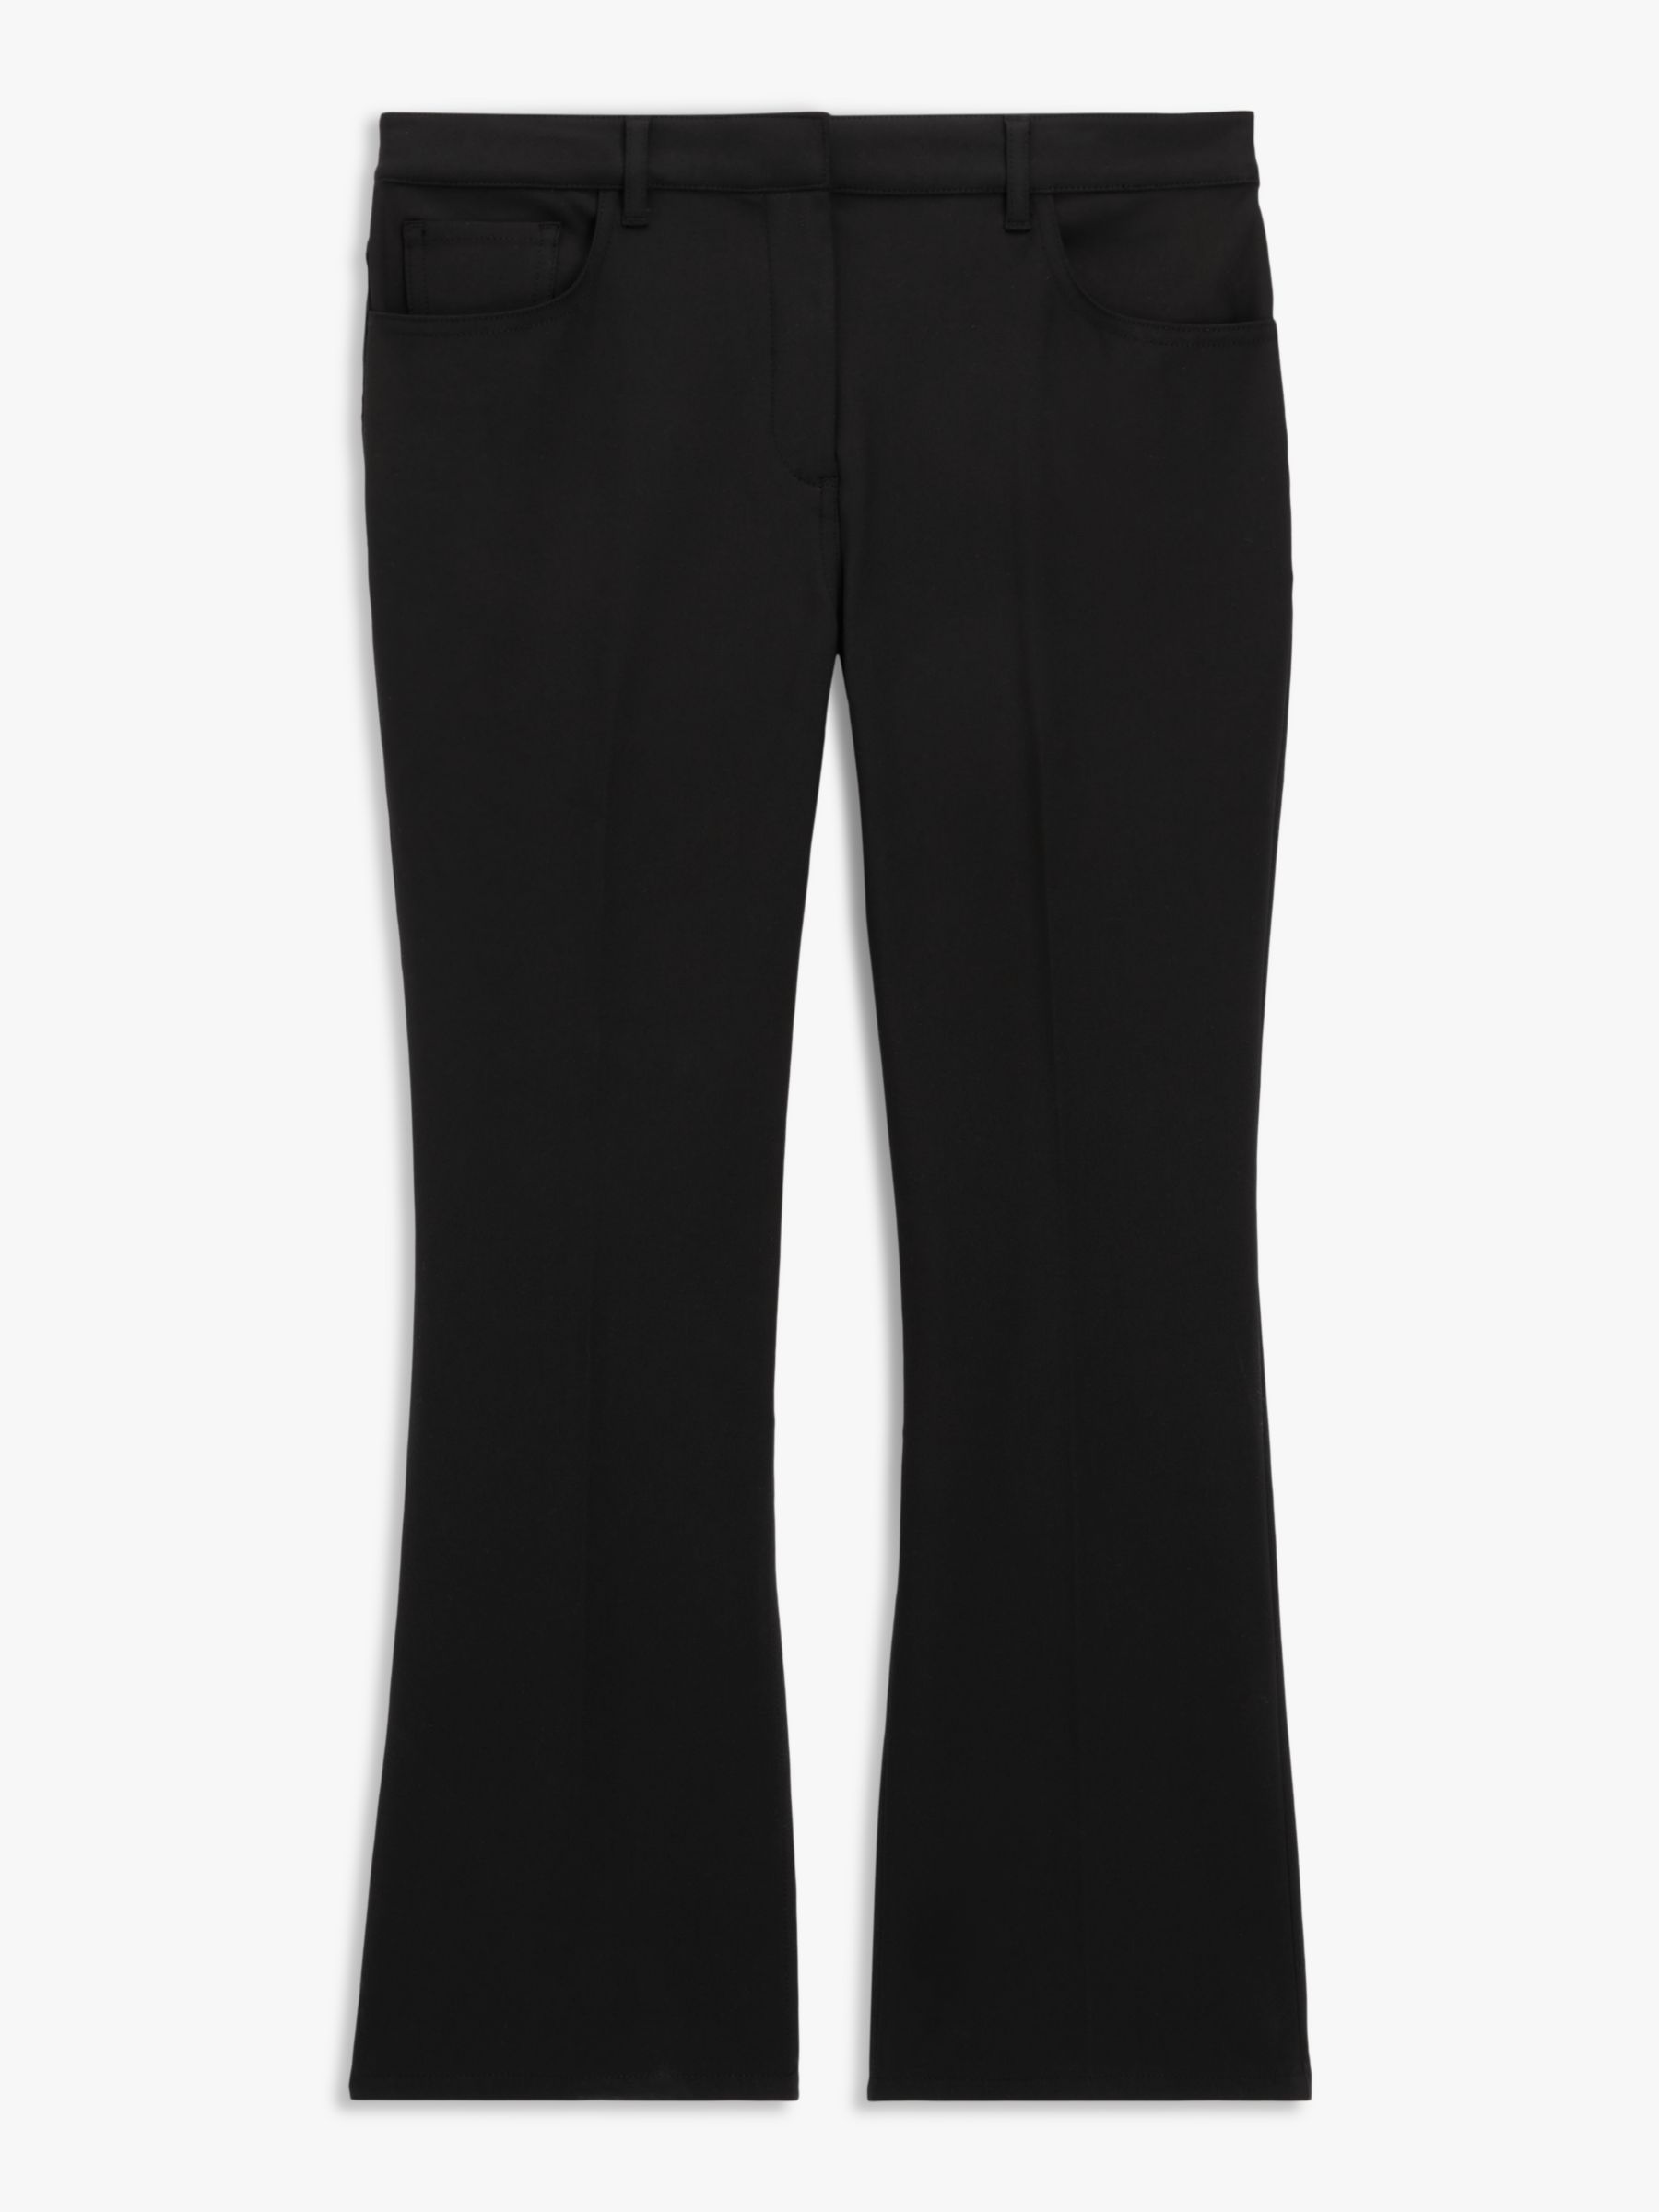 Buy Black Kick Flare Trousers 10S, Trousers